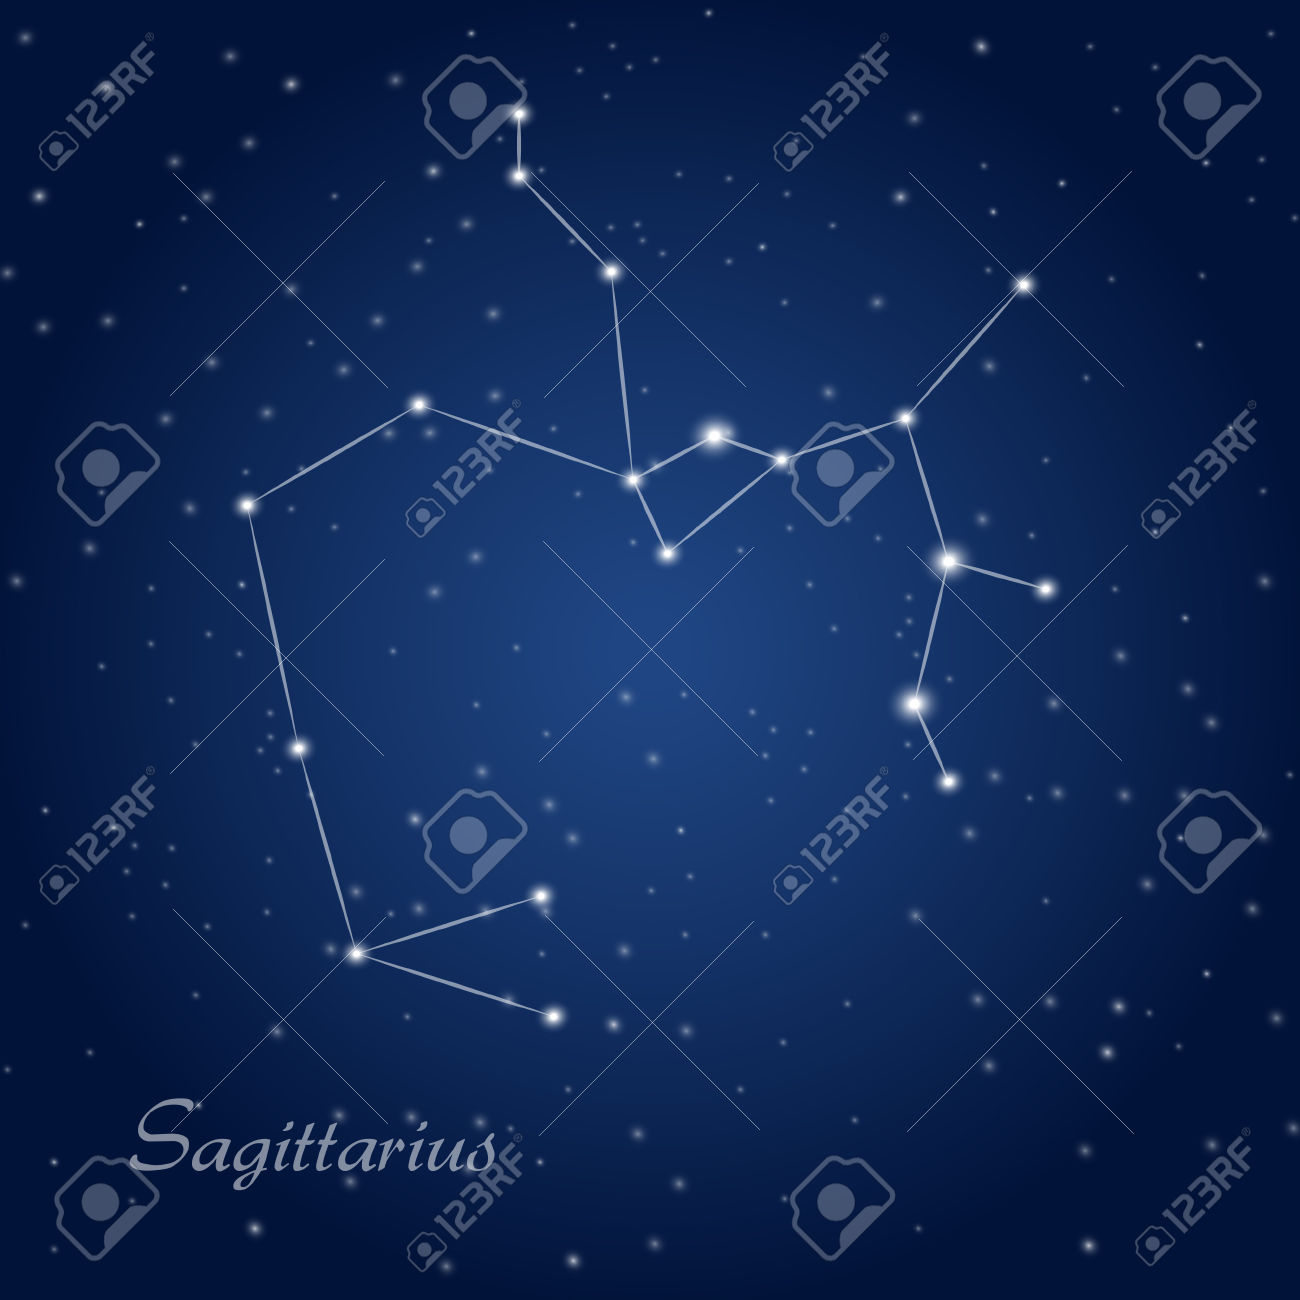 Sagittarius Constellation Zodiac Sign At Starry Night Sky Royalty.